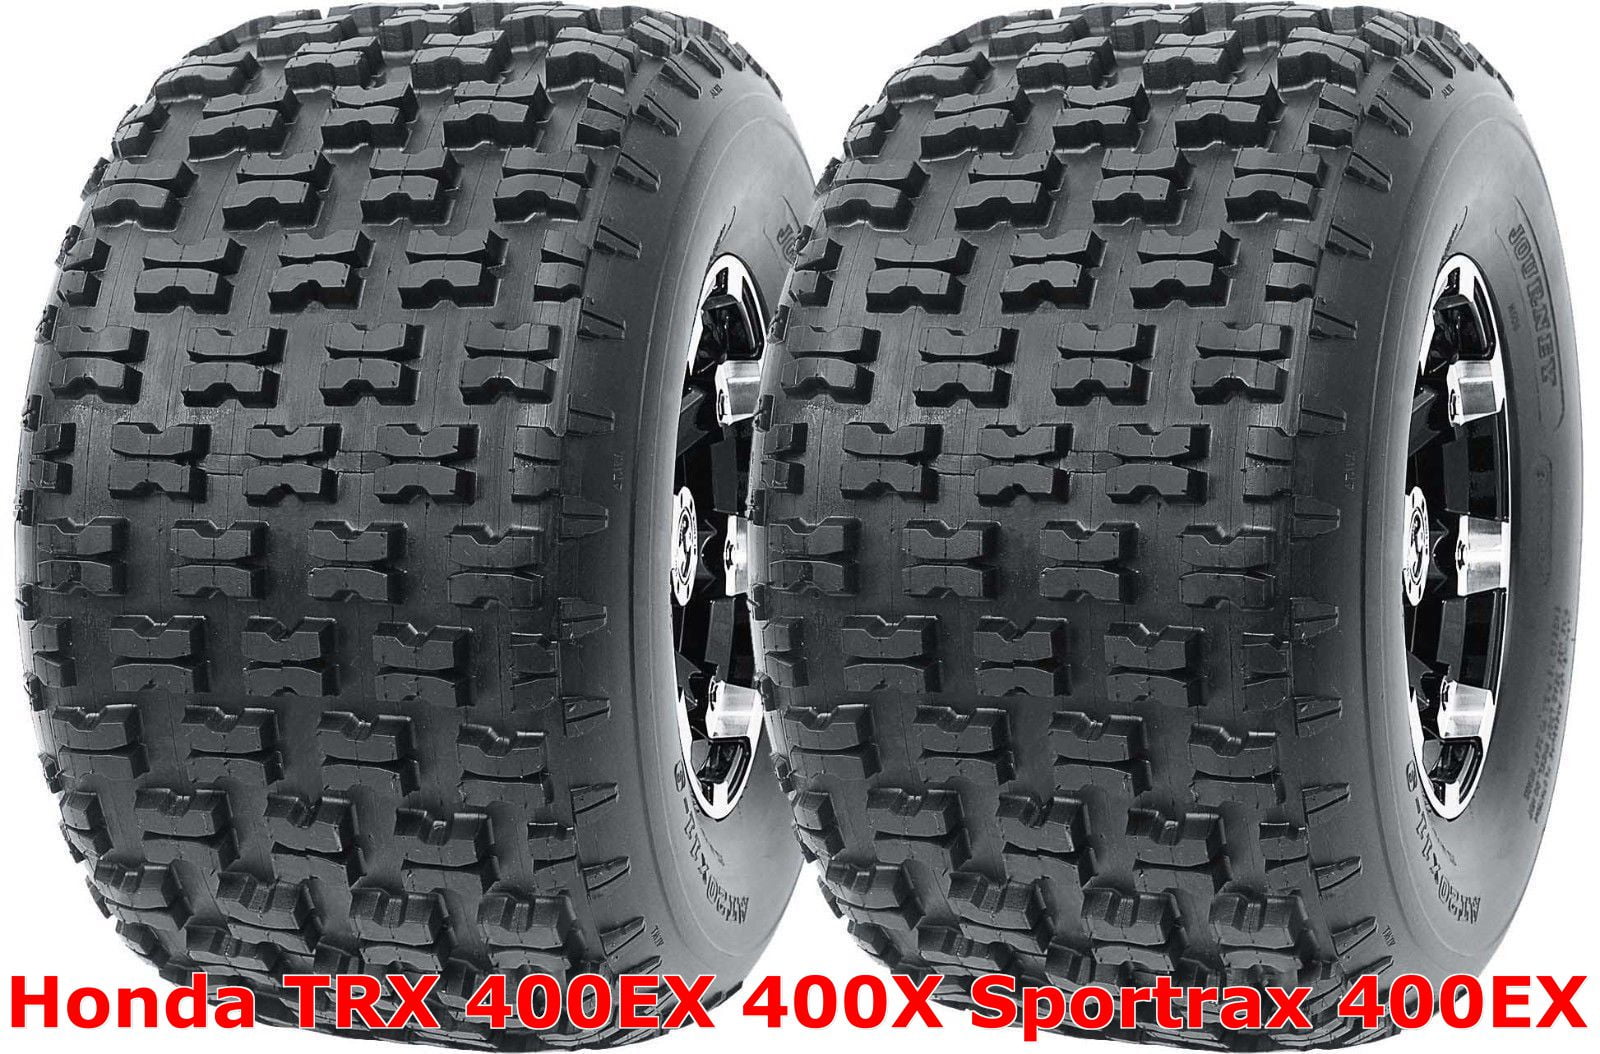 2 2 Inch FOR Honda TRX 400EX 400X 450R 4/110 Wheel Spacers Rear 2.0" ATV 